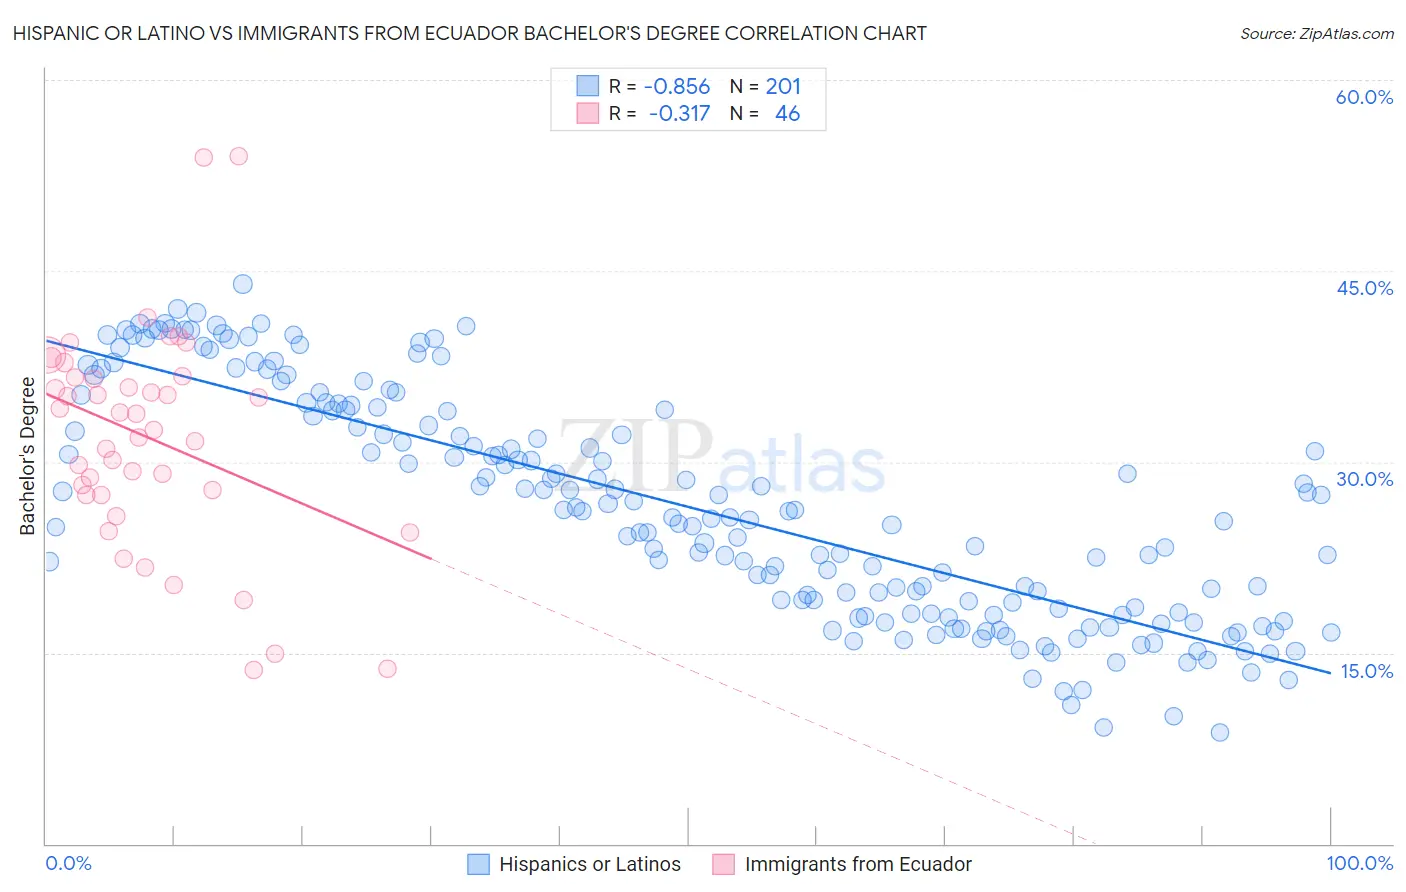 Hispanic or Latino vs Immigrants from Ecuador Bachelor's Degree